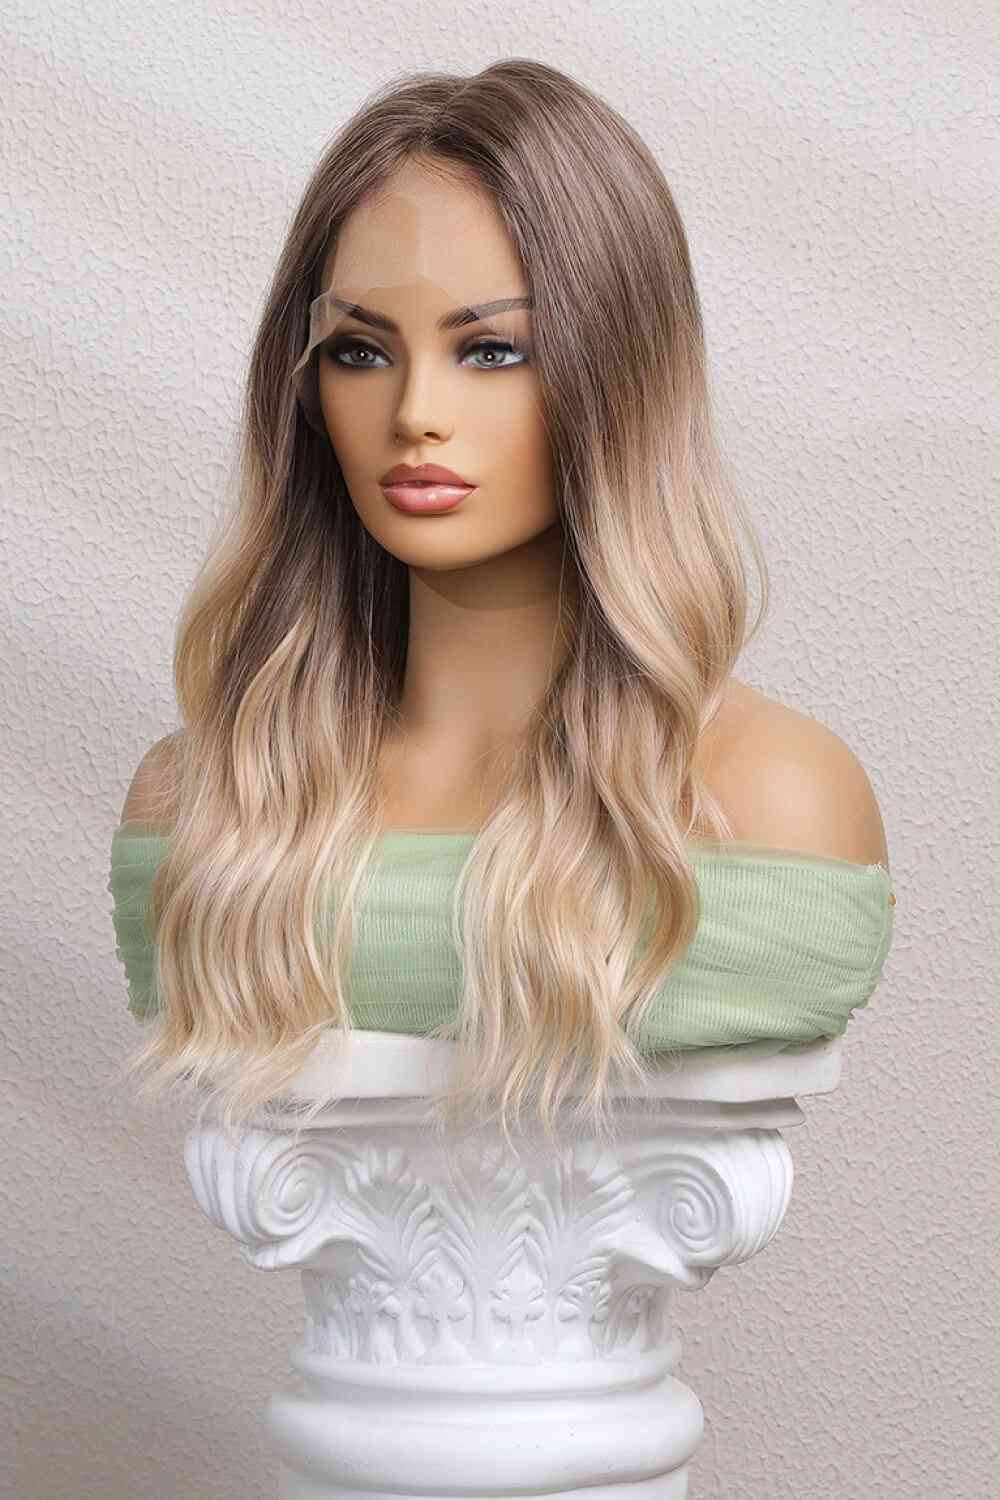 TEEK - Light Brown/Blonde Ombre Wave Lace Front 24" Wig HAIR TEEK Trend   